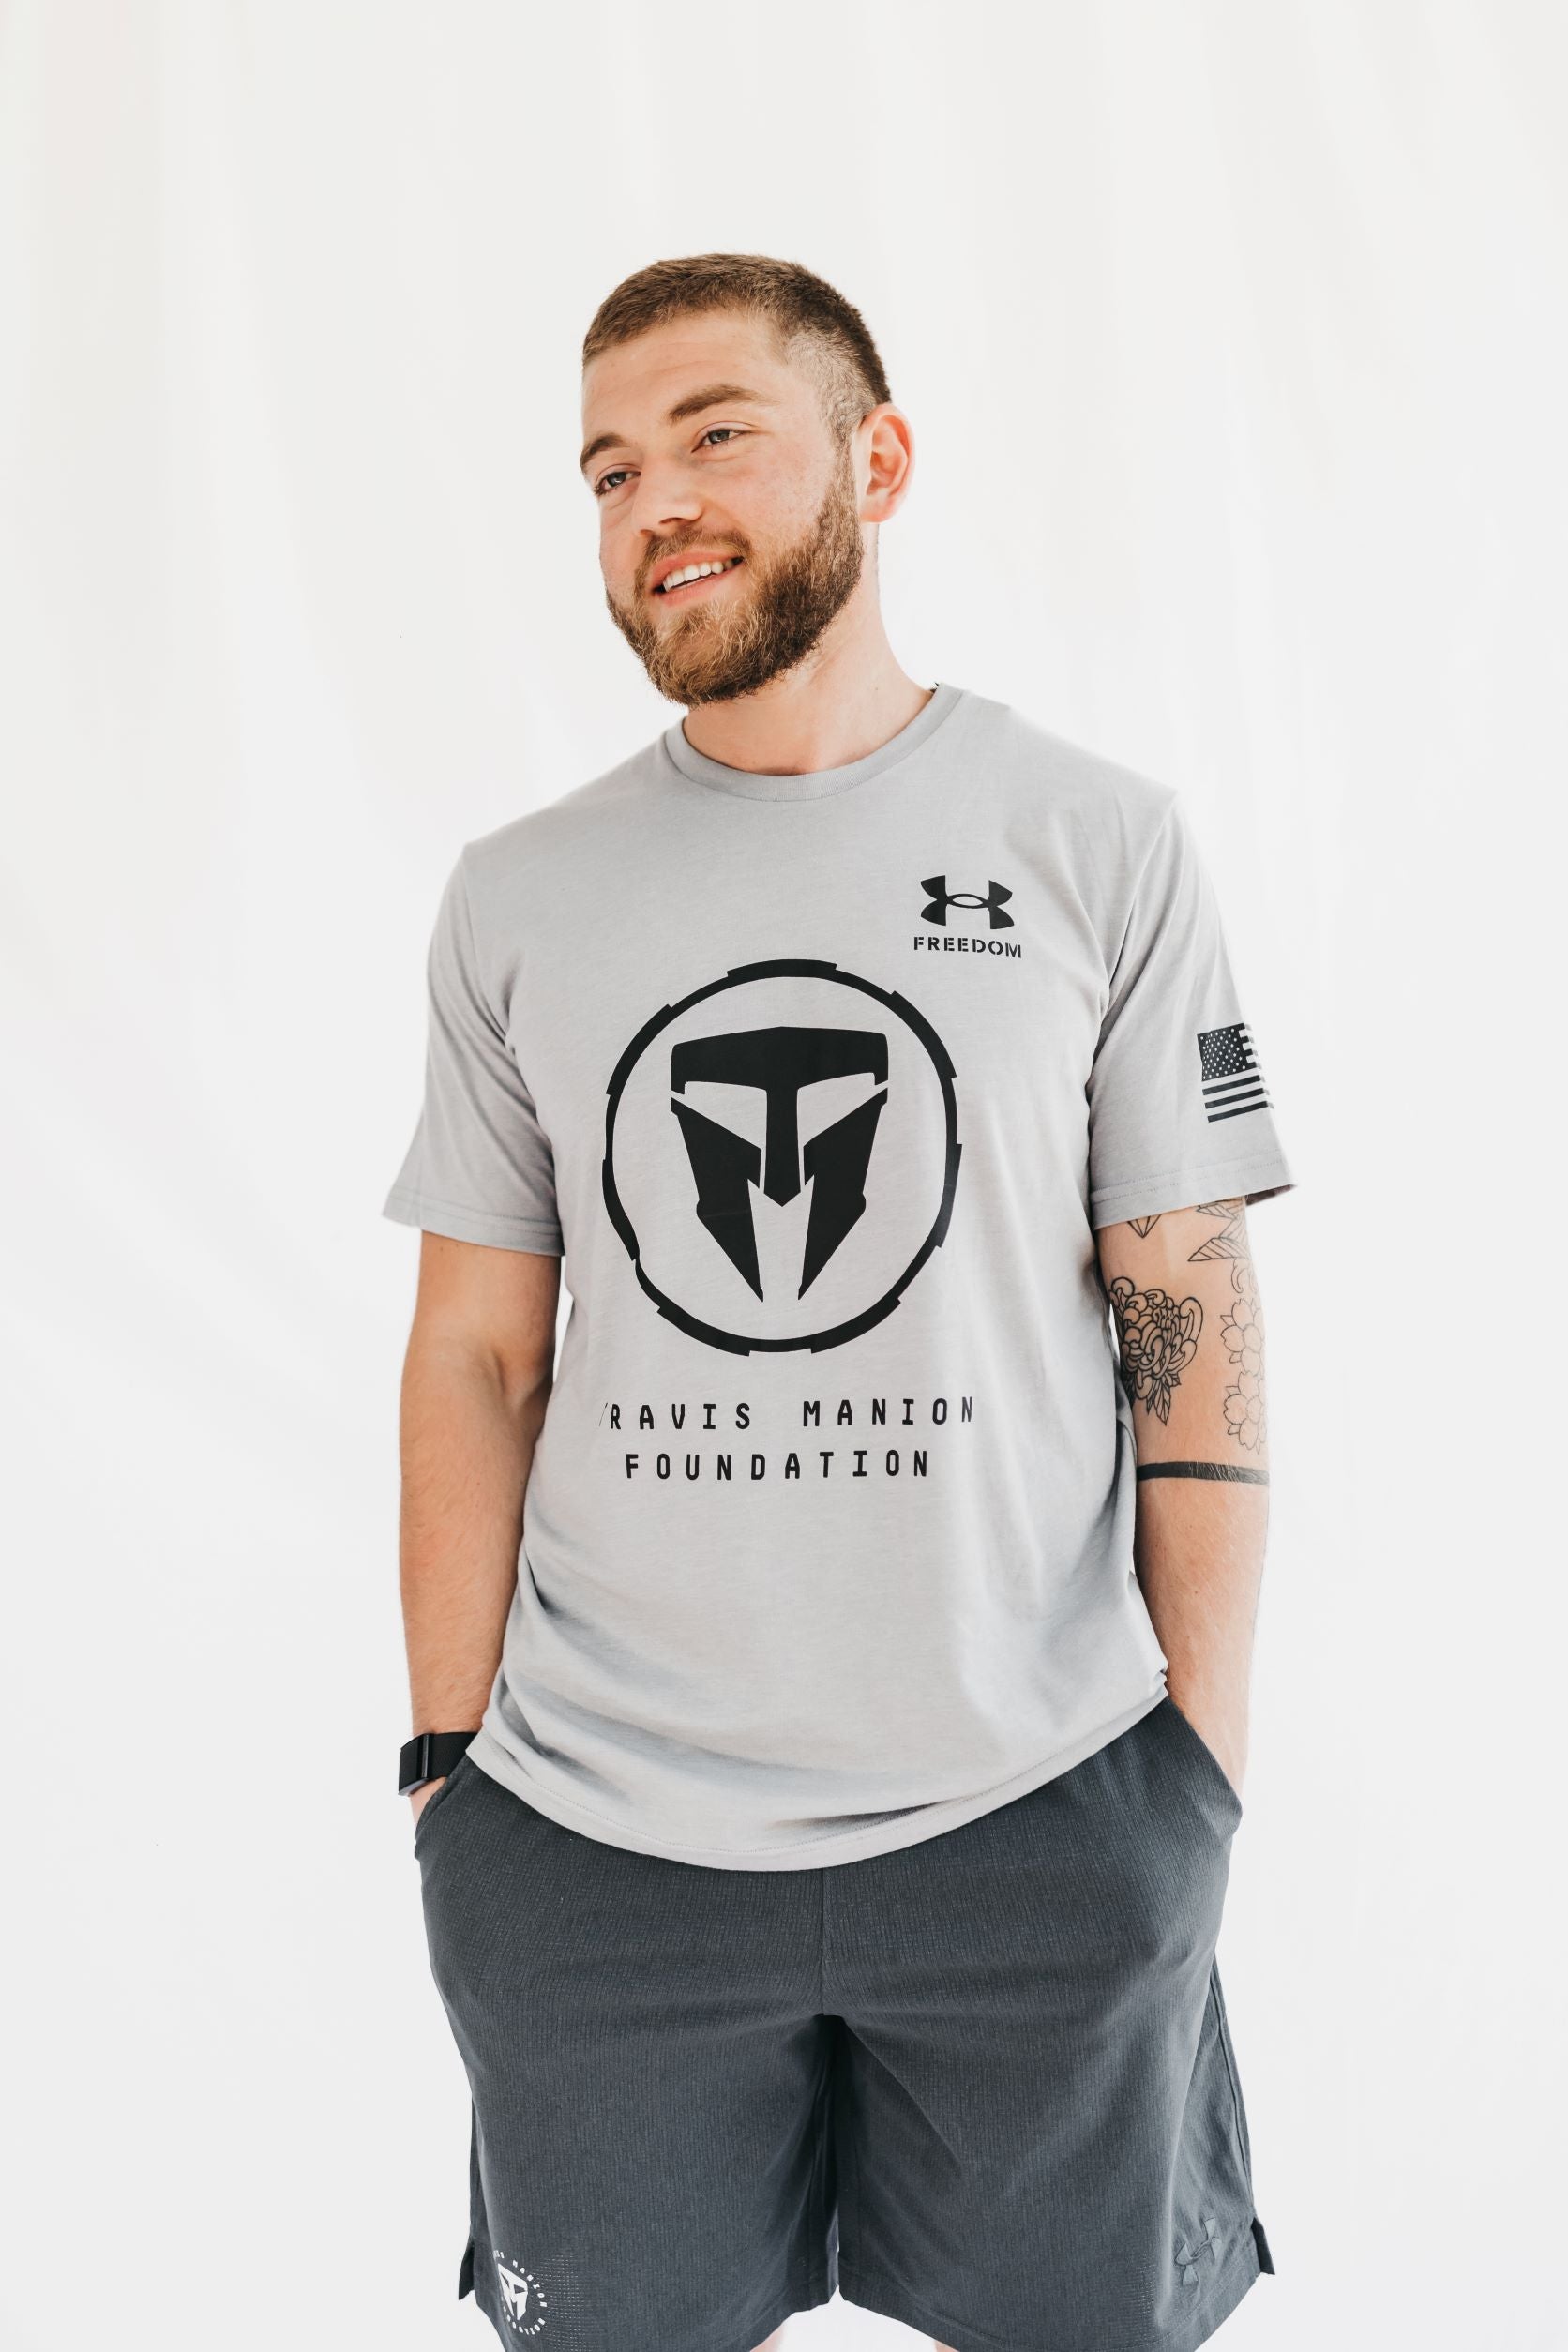 Men's UA Motivator Vented Coach's Shorts- Grey